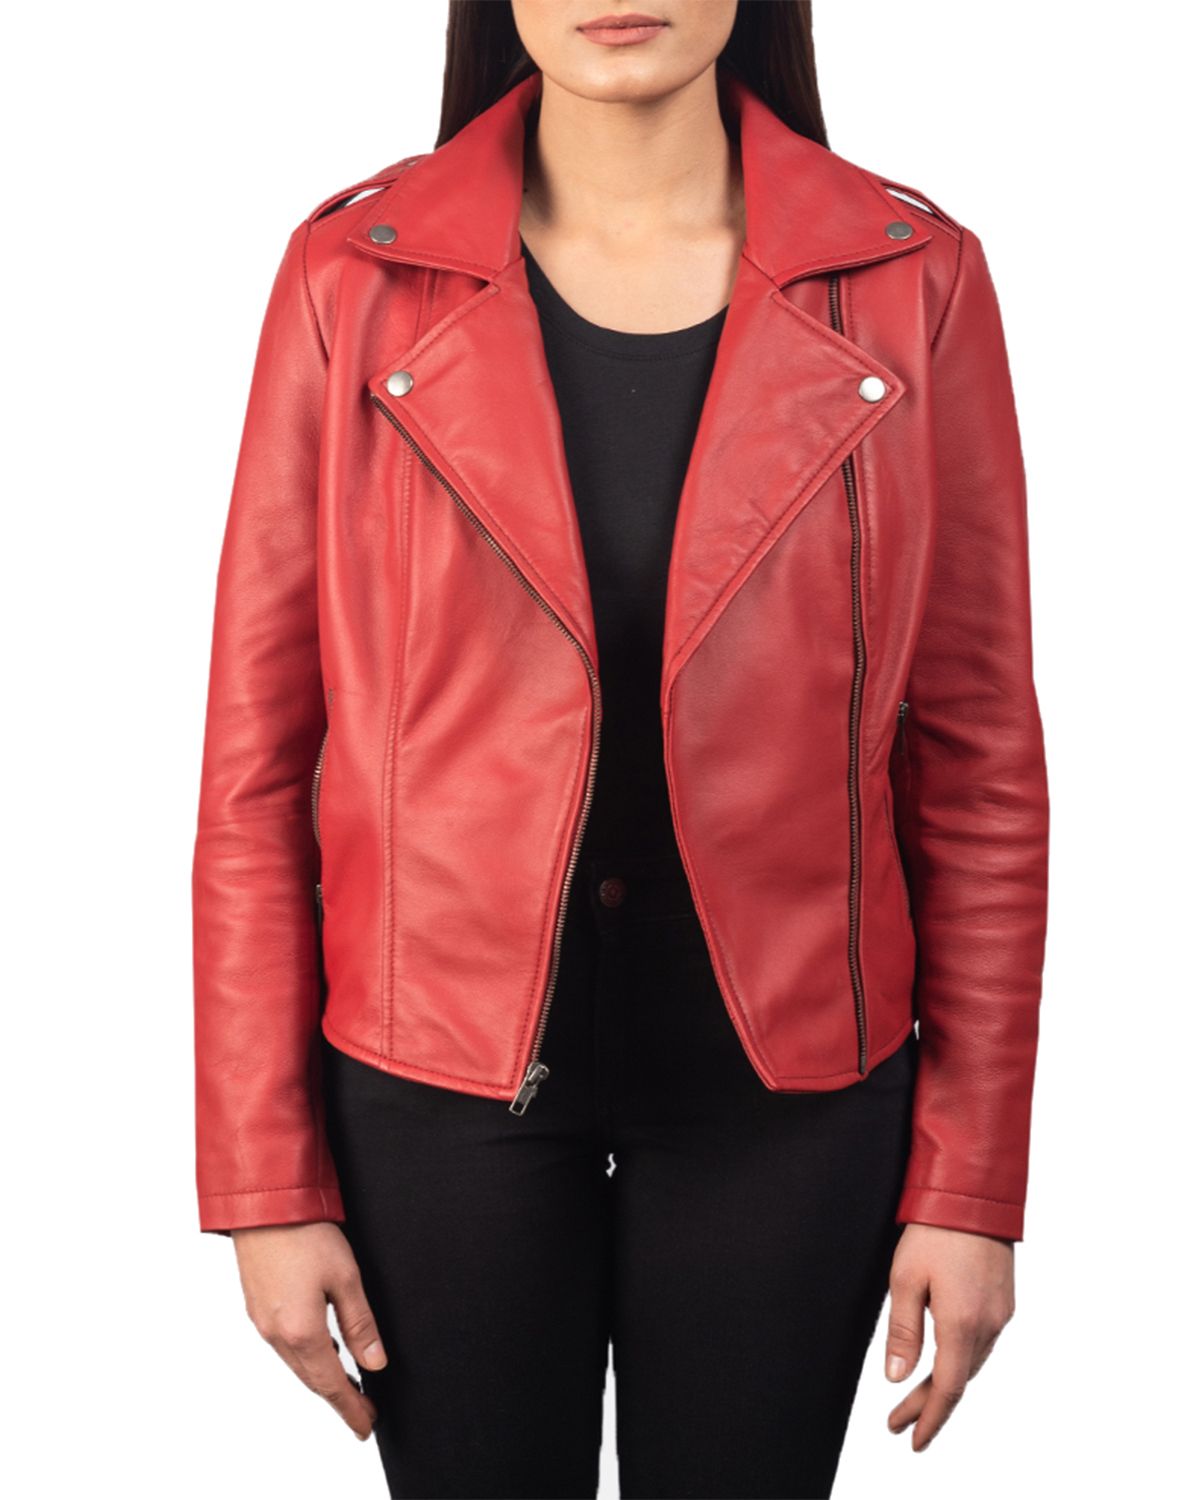 Elite Women's Notch Collar Stylish Biker Leather Jacket